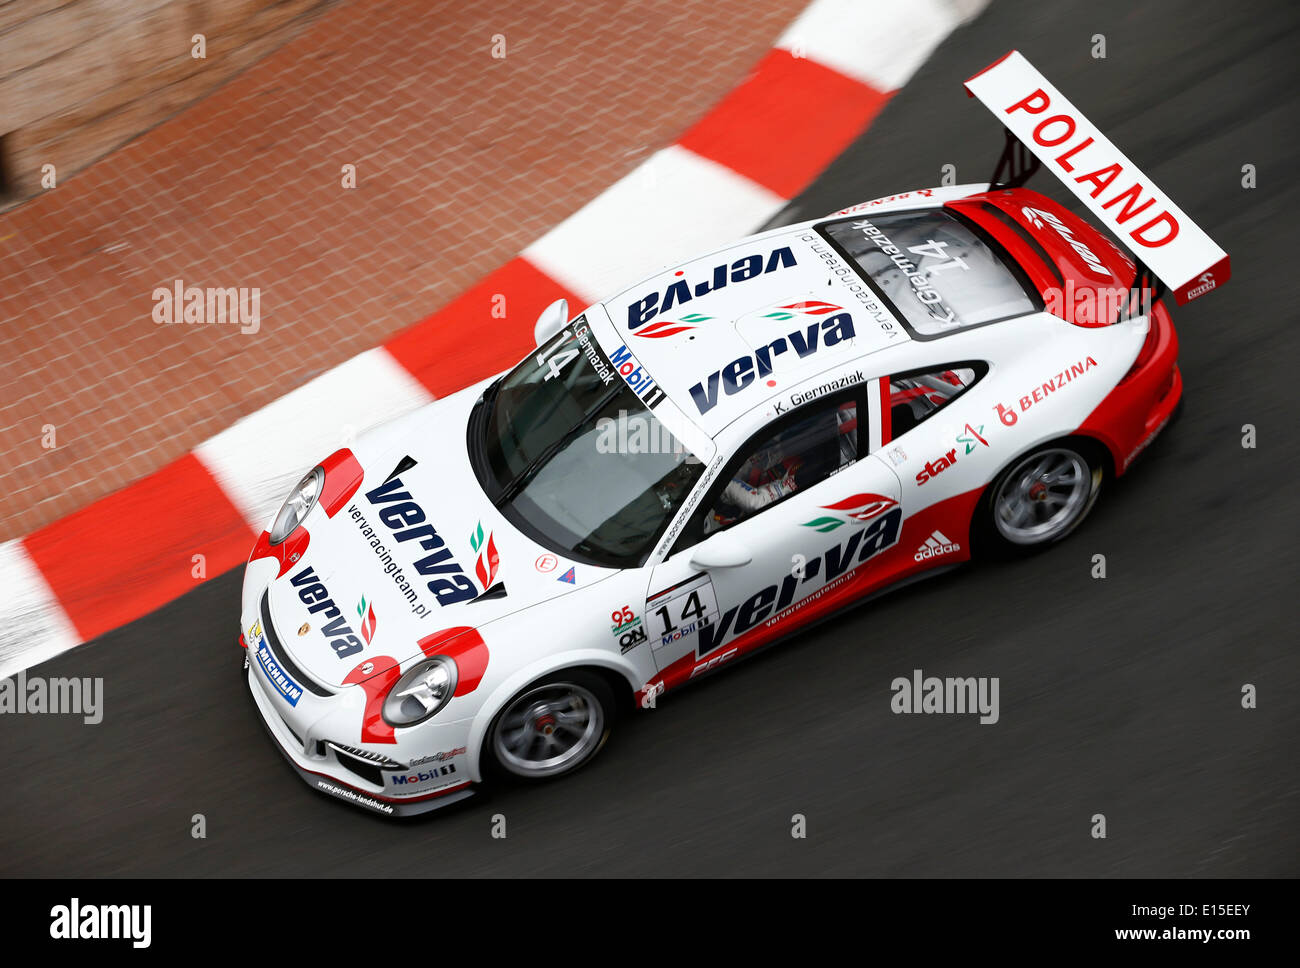 Kuba Giermaziak Porsche Supercup High Resolution Stock Photography And Images Alamy